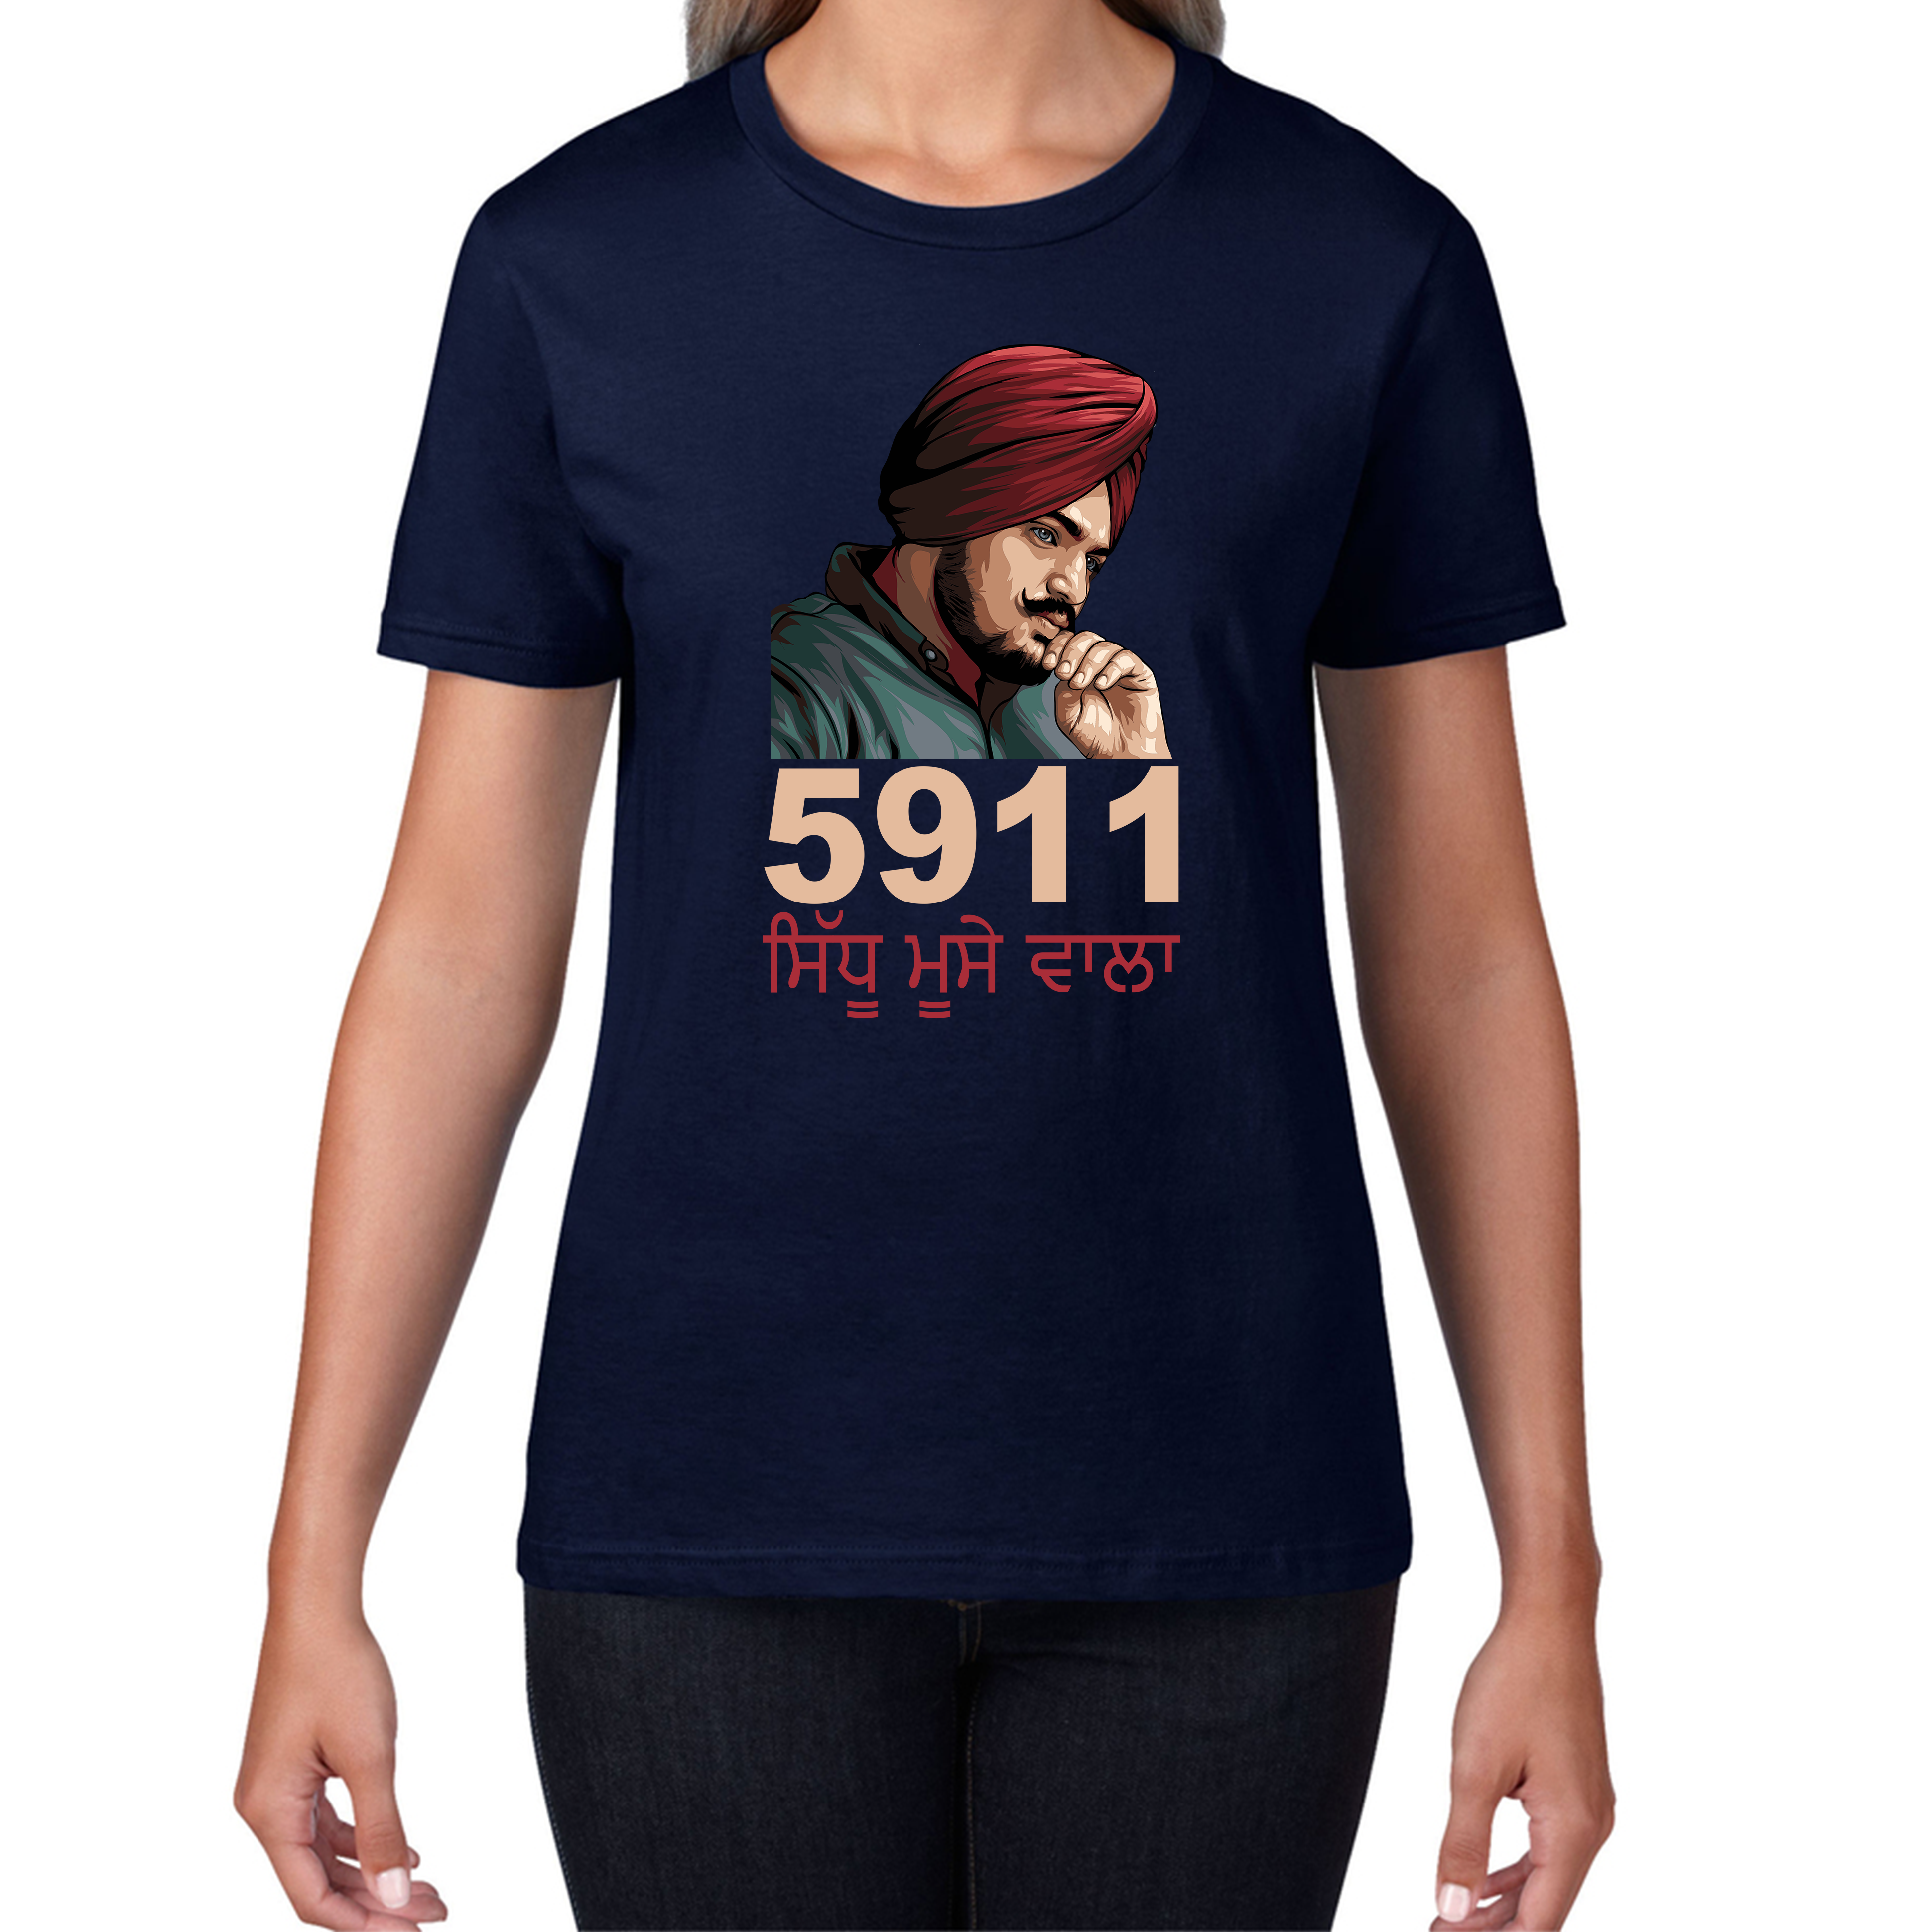 Sidhu Moose Wala 5911 Song T-Shirt Legend Punjabi Indian Singer Tribute To Legend Sidhu Moose Wala Womens Tee Top